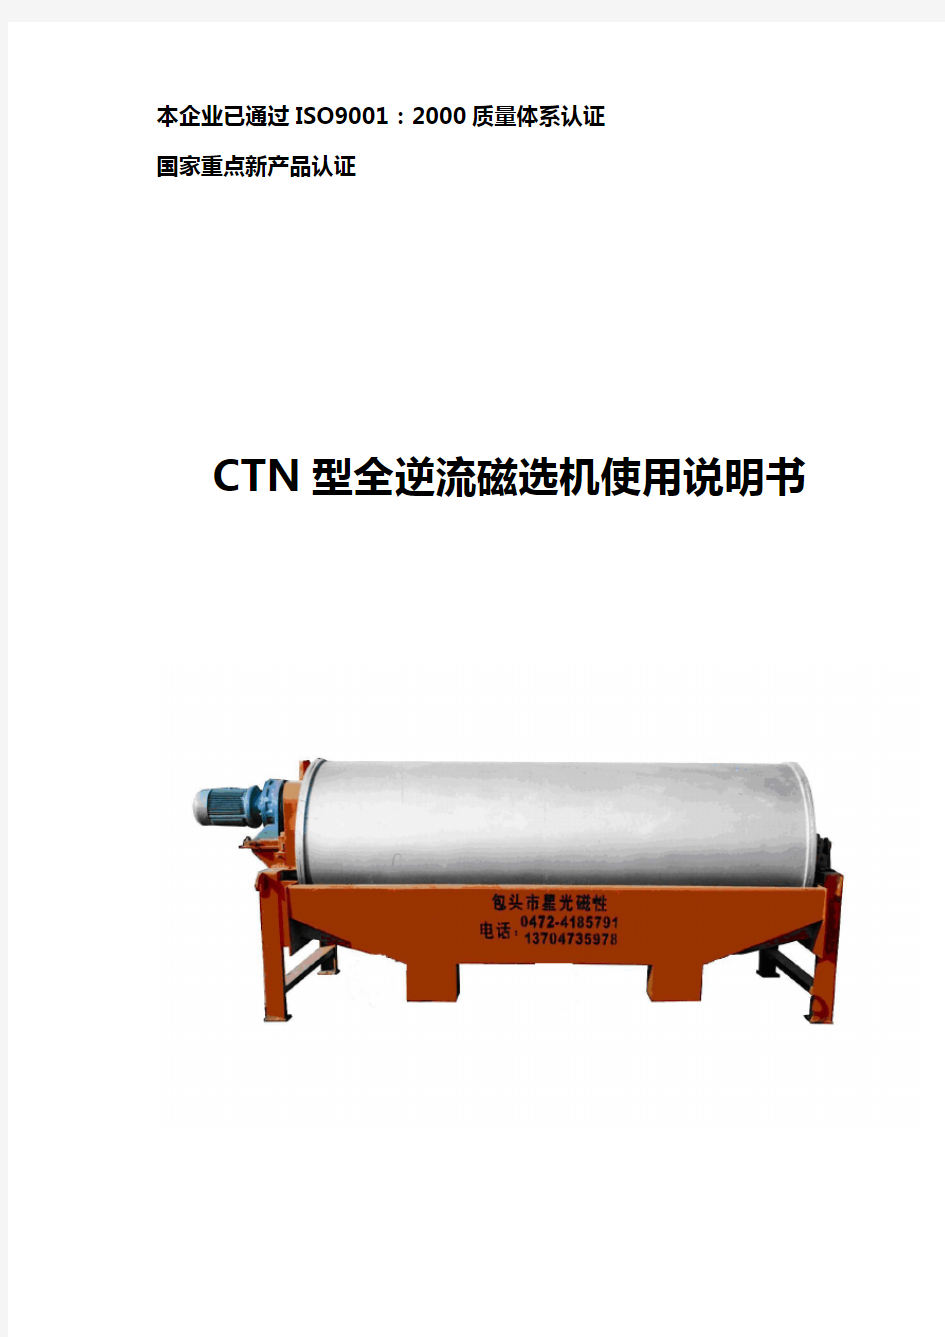 CTN磁选机说明书